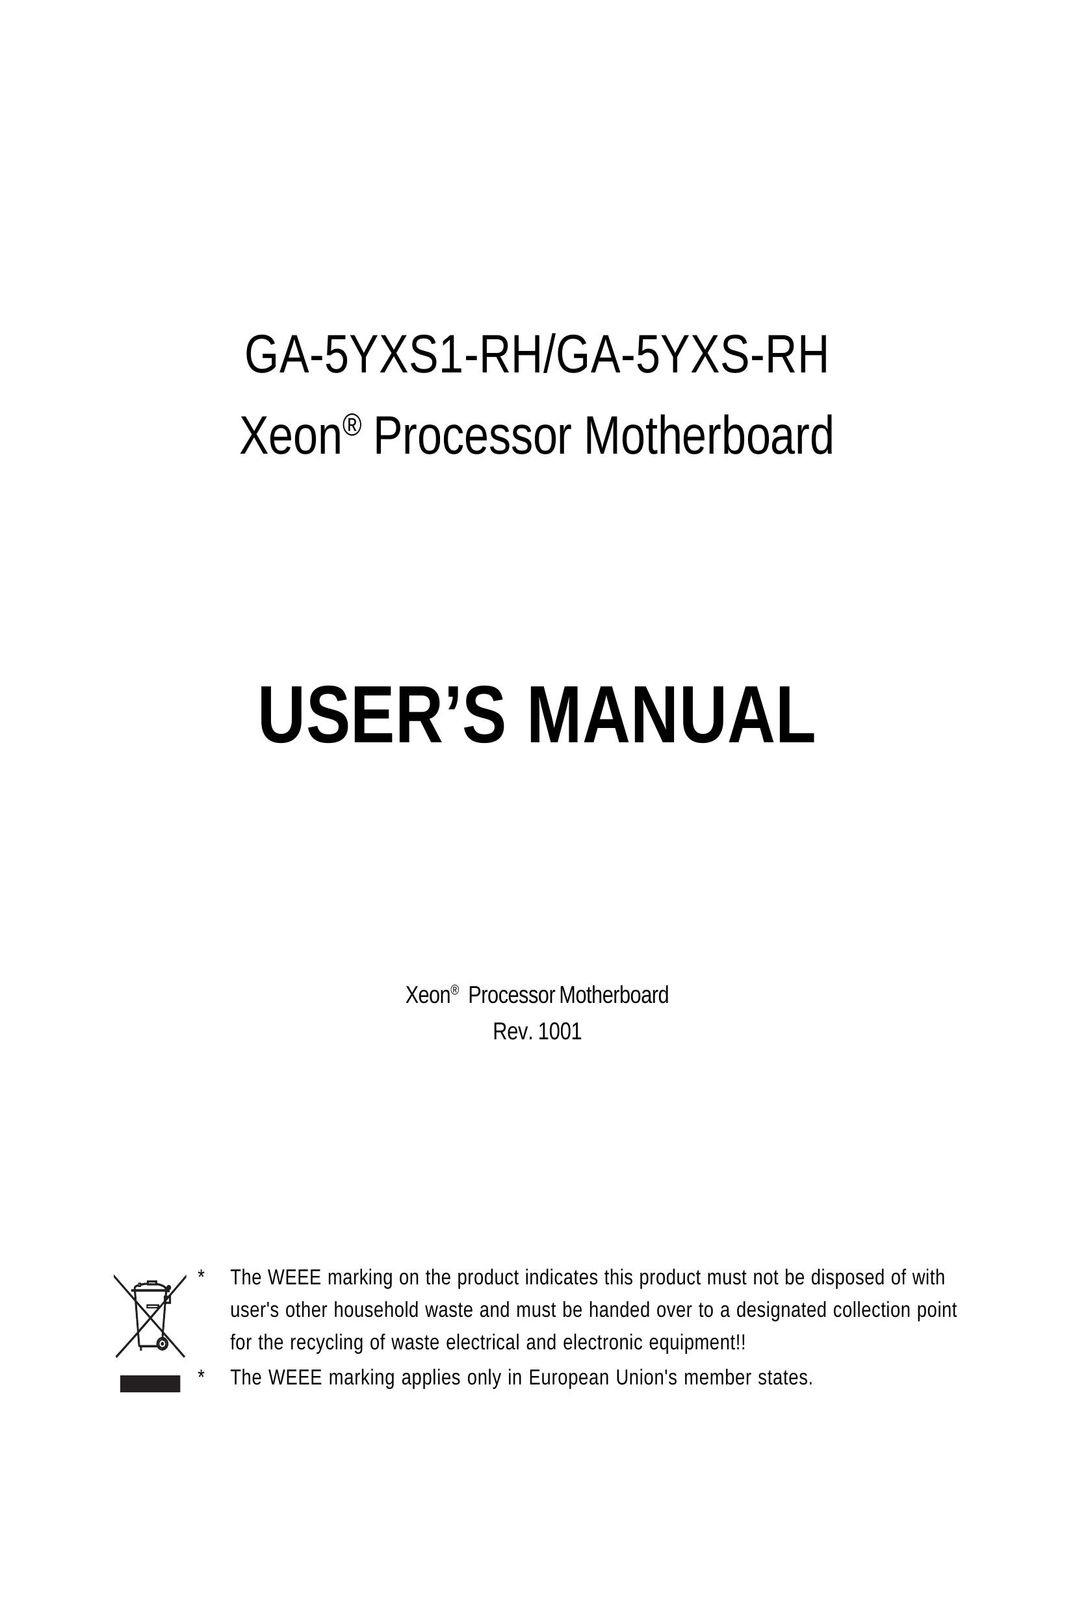 Gigabyte GA-5YXS1-RH Network Card User Manual